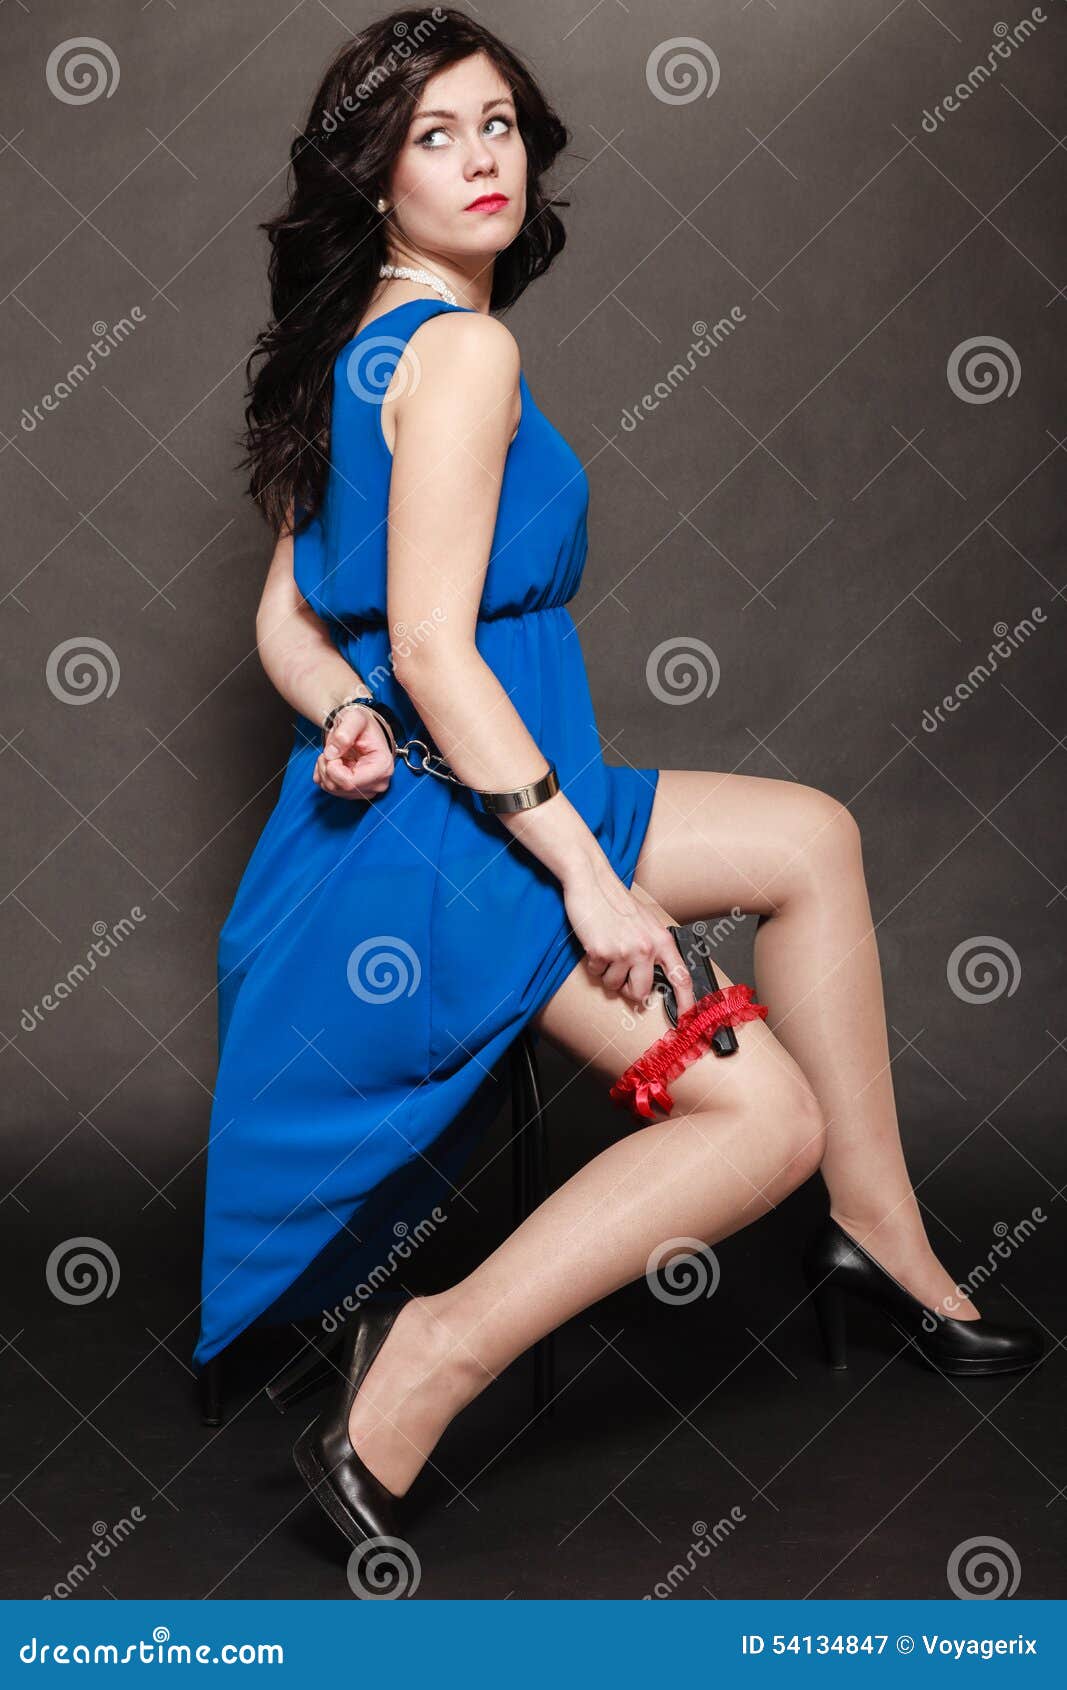 Фотография на тему Девушка в наручниках, на белом фоне | PressFoto